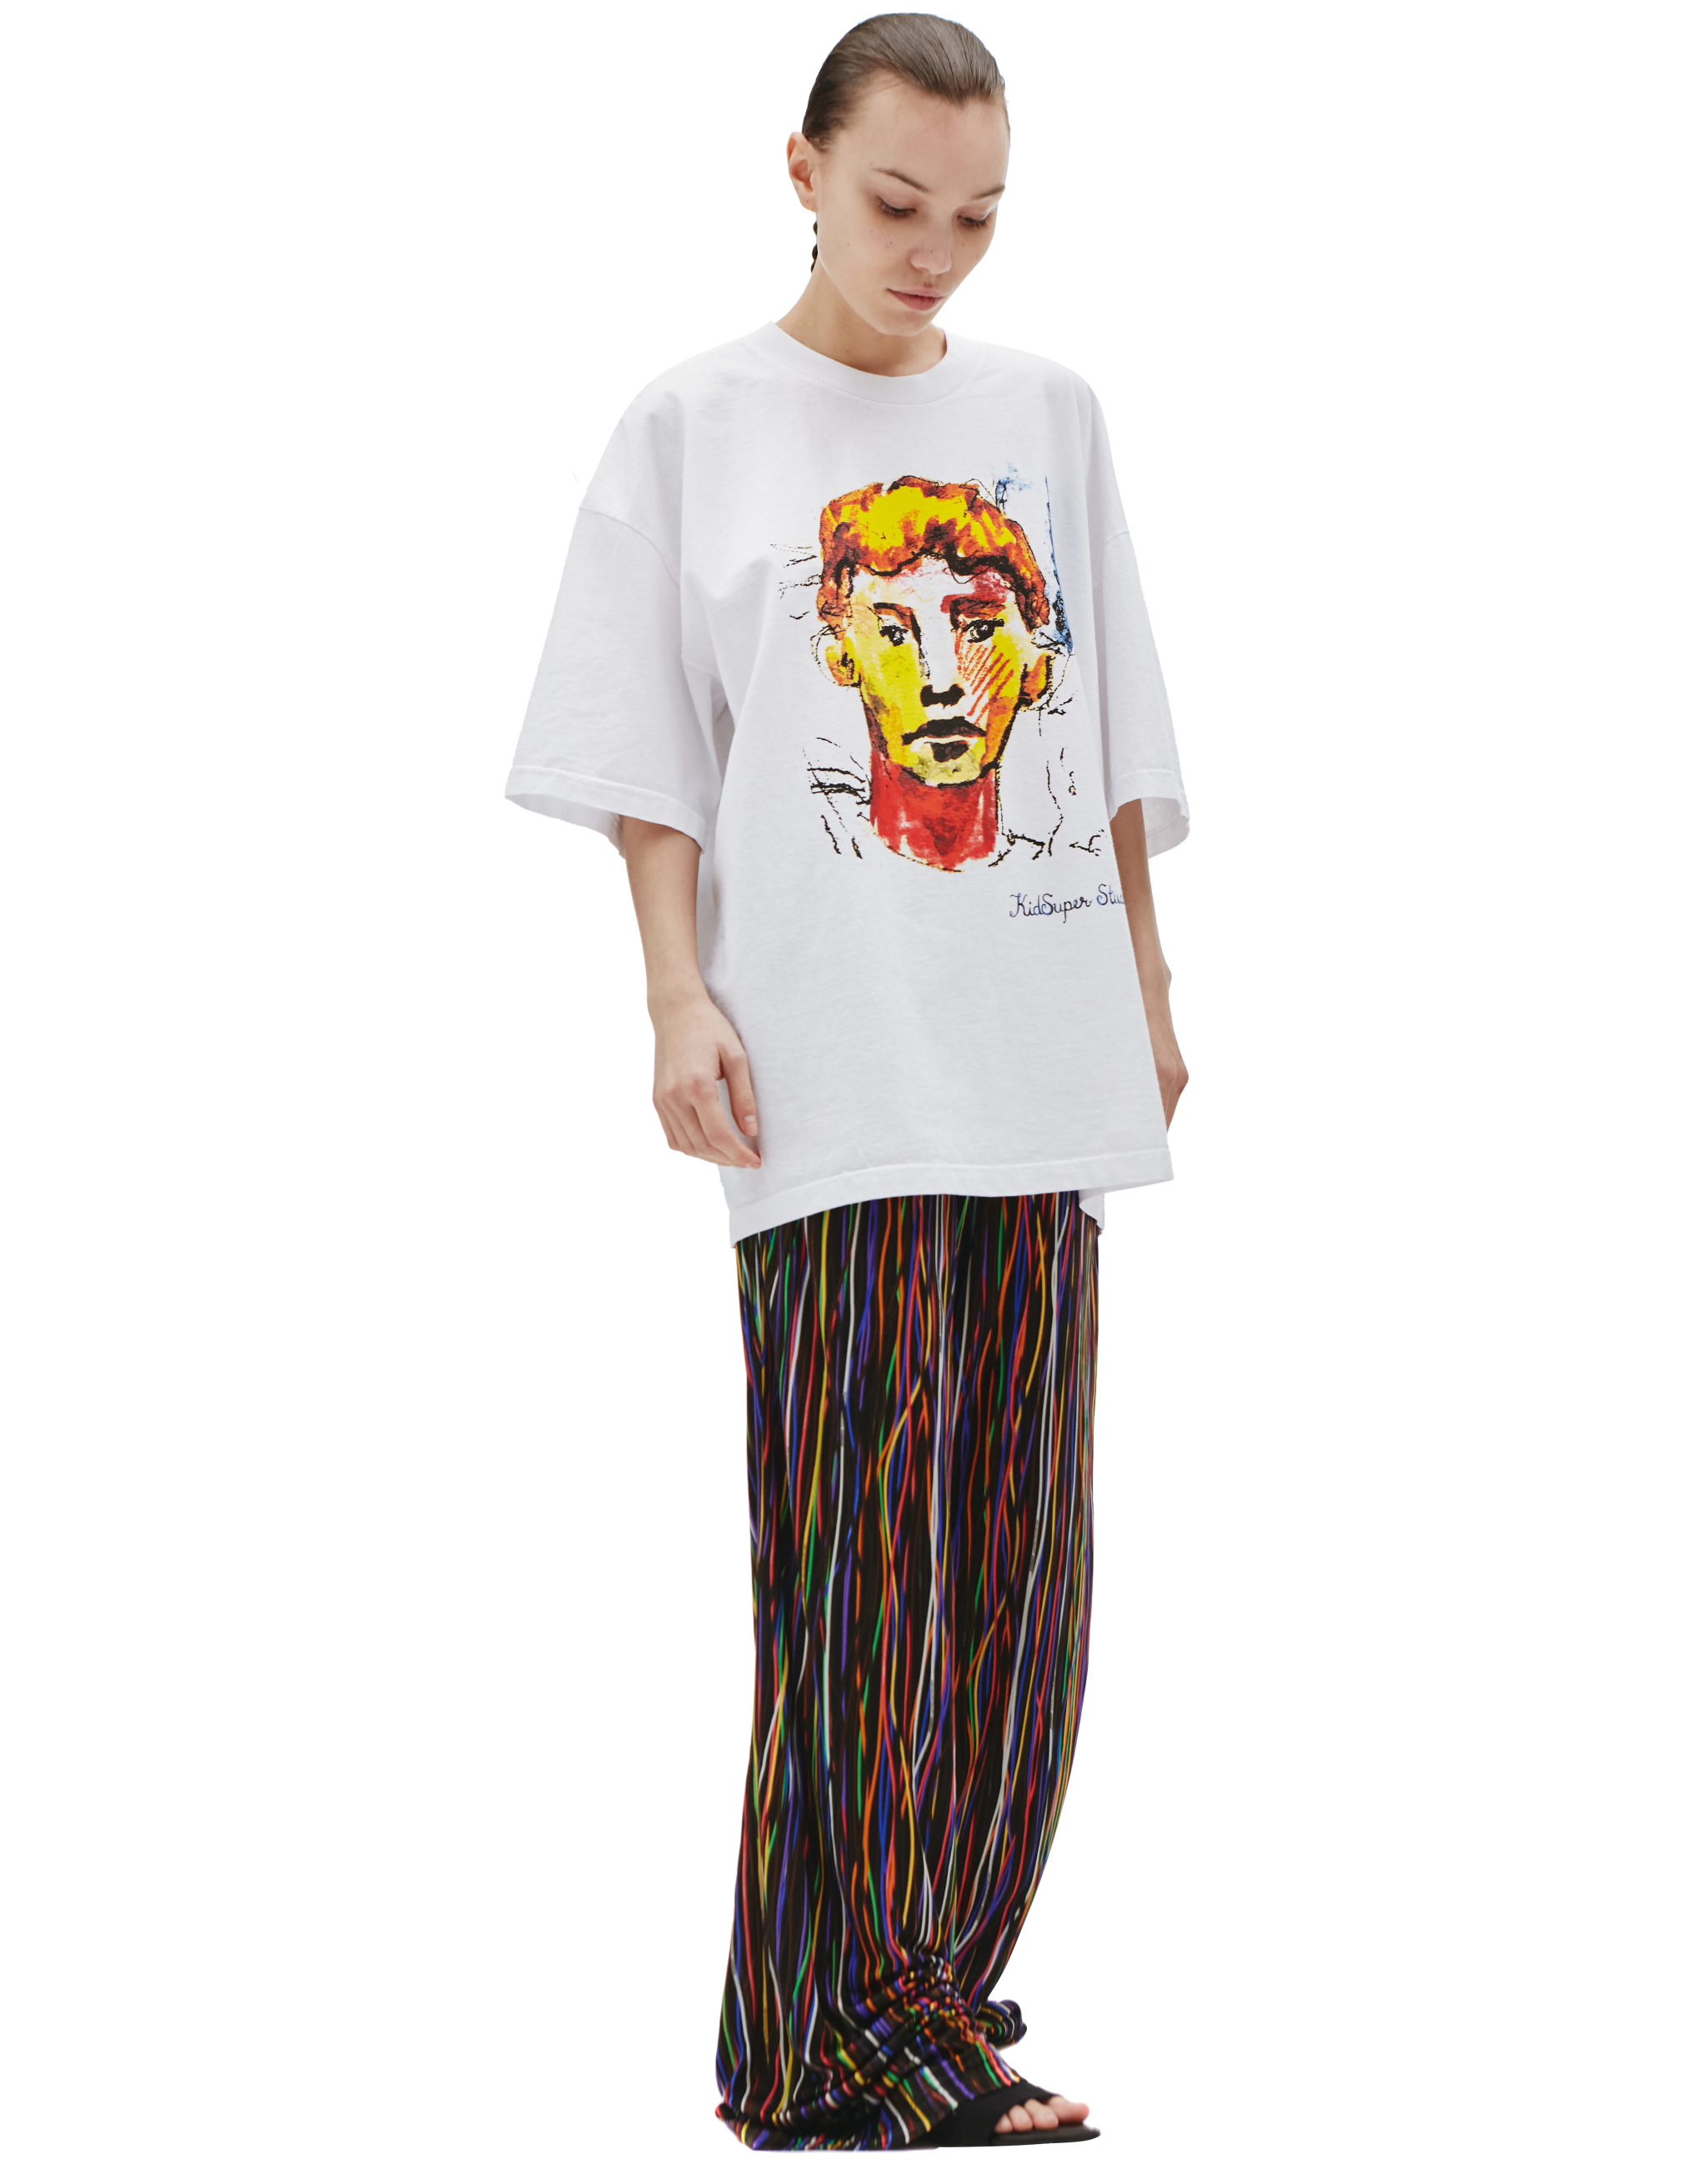 Хлопковая футболка с принтом KidSuper KSPF01/wht, размер XL;M KSPF01/wht - фото 1